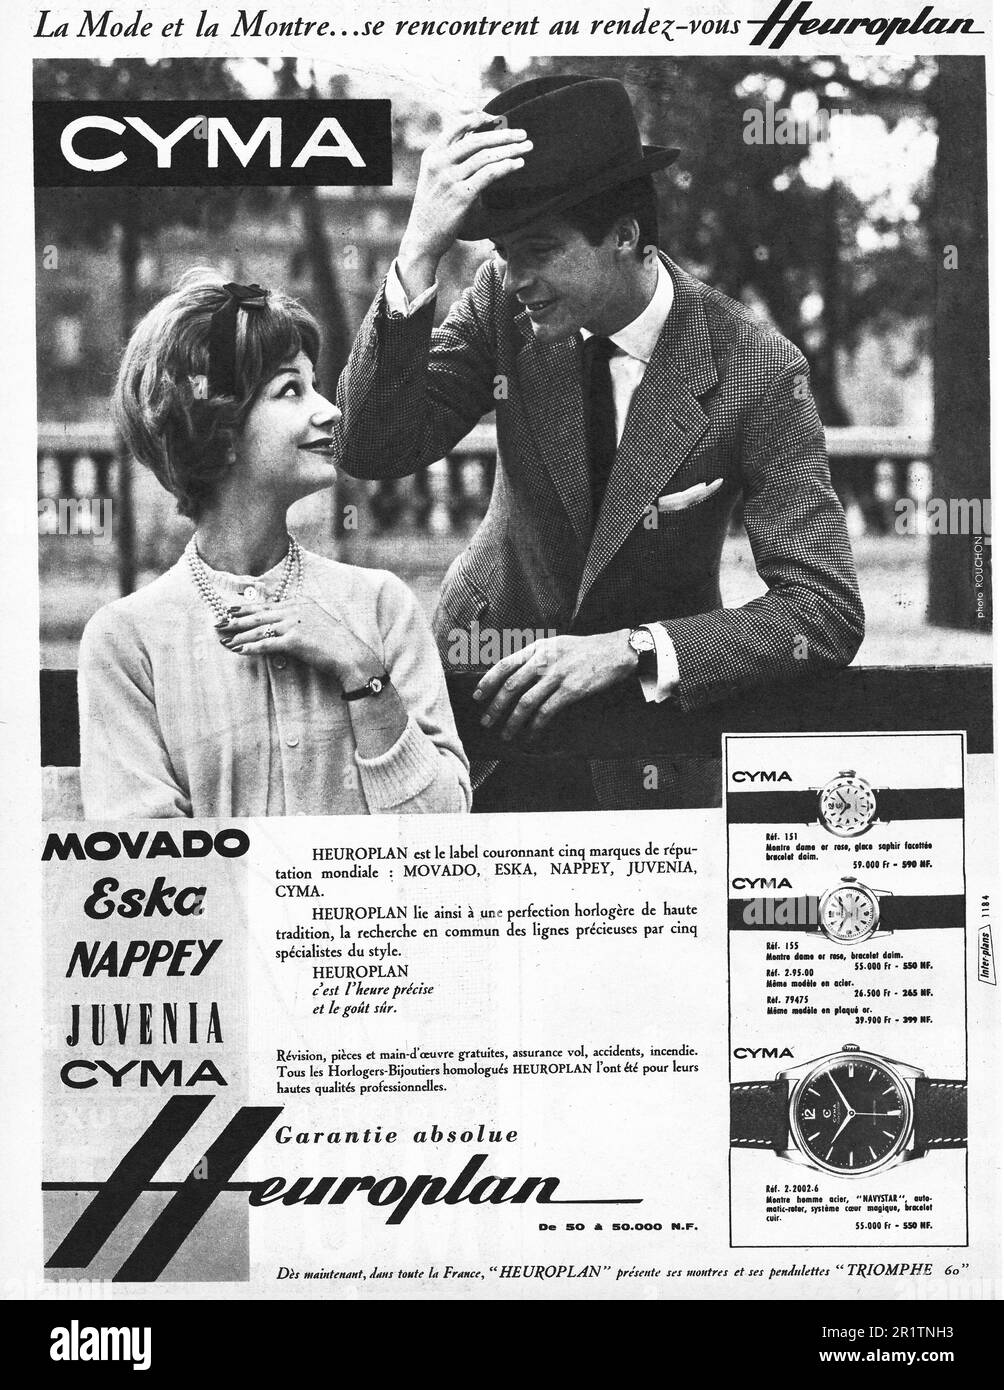 1959 Heuroplan Cyma watch French print ad. Movado, Cyma, Eska, and Juvenia watches. Stock Photo